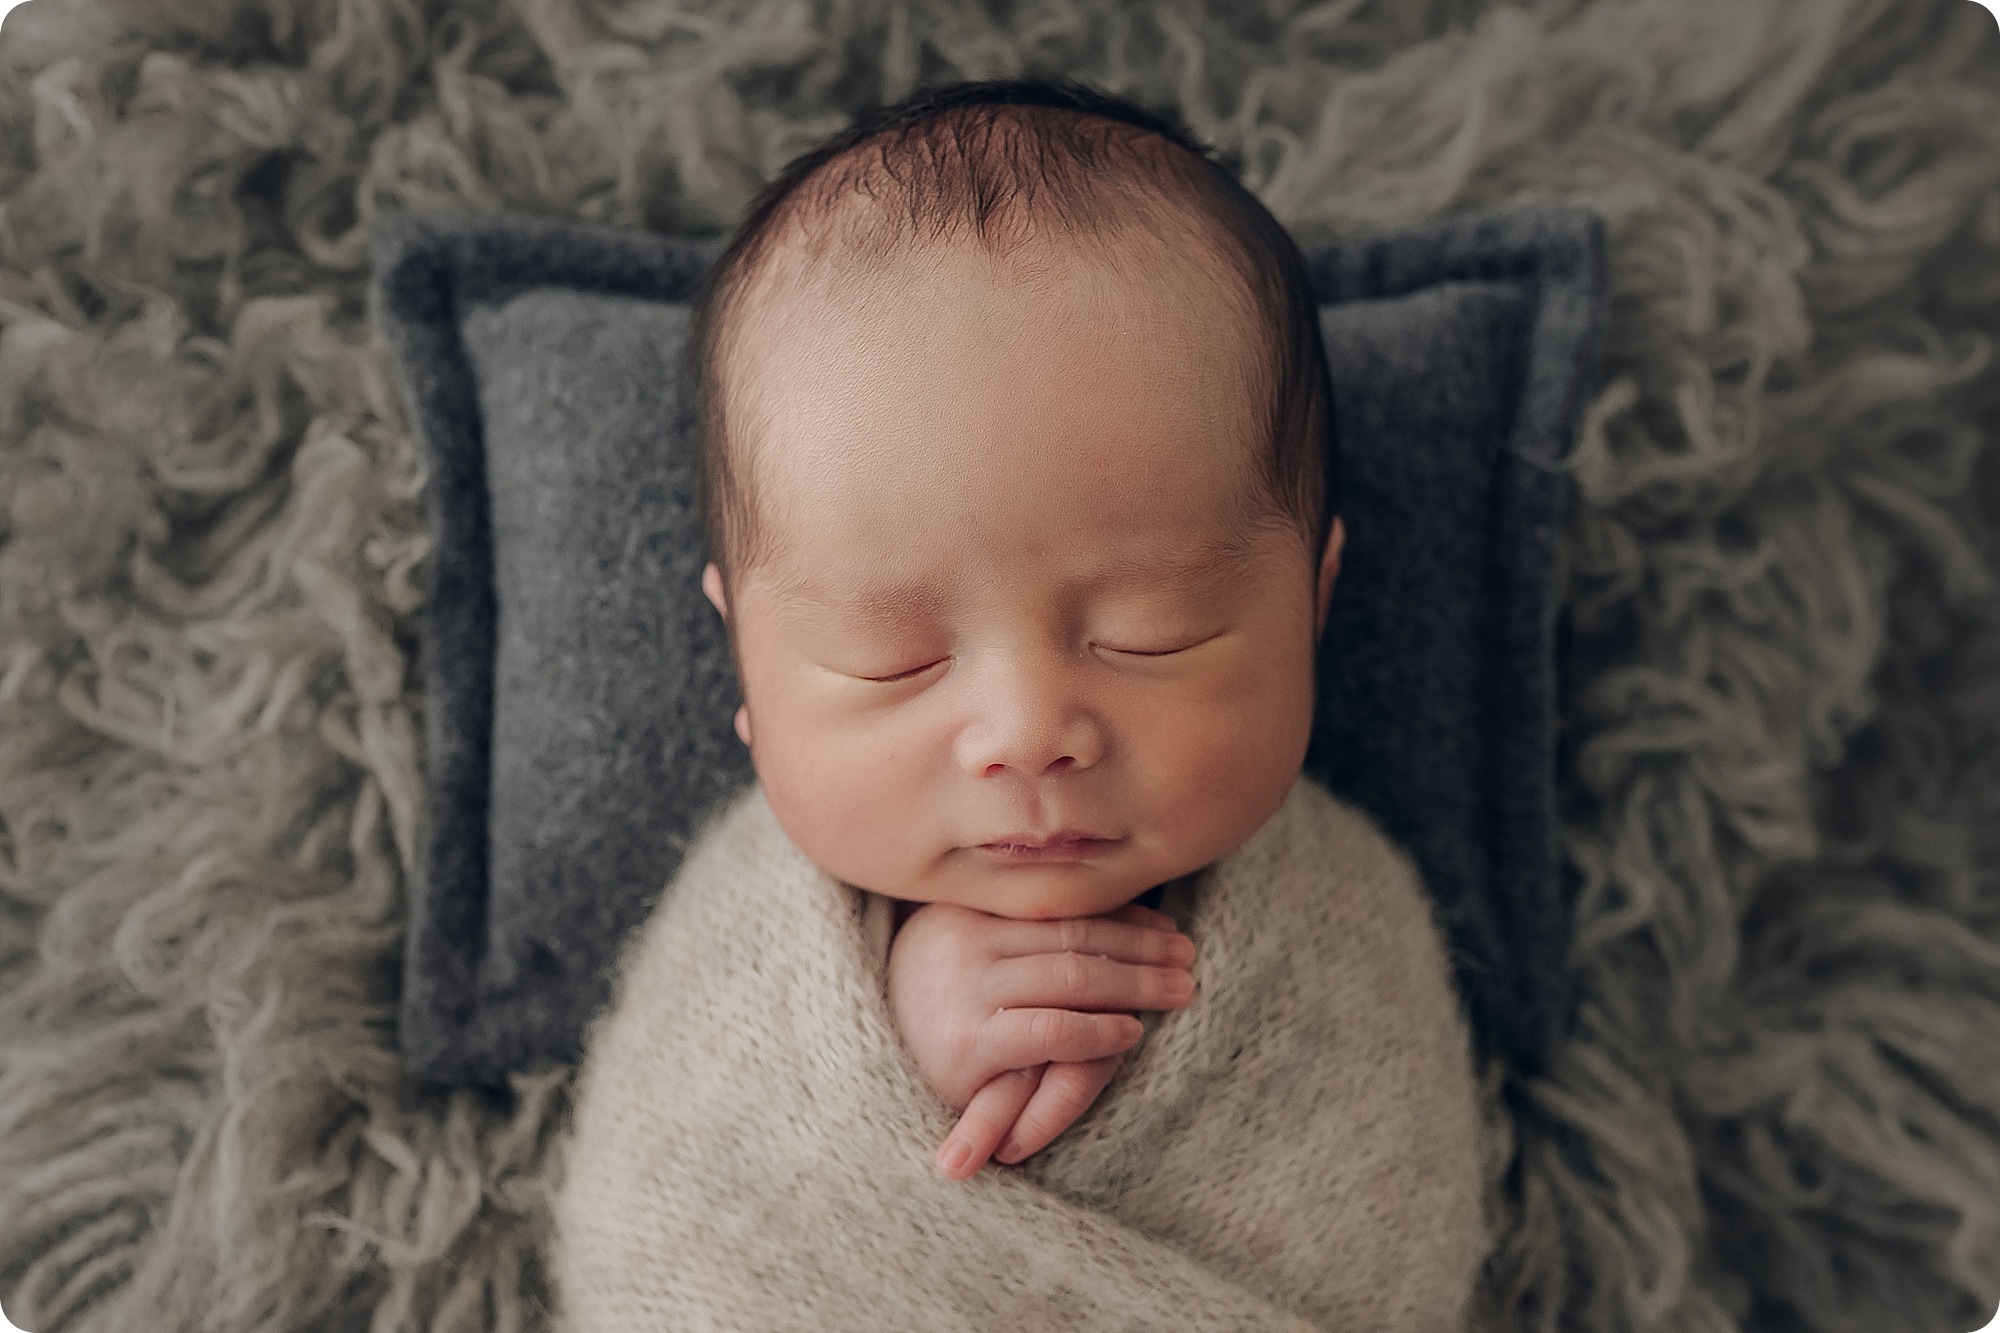 Utah newborn session with Beka Price Photography